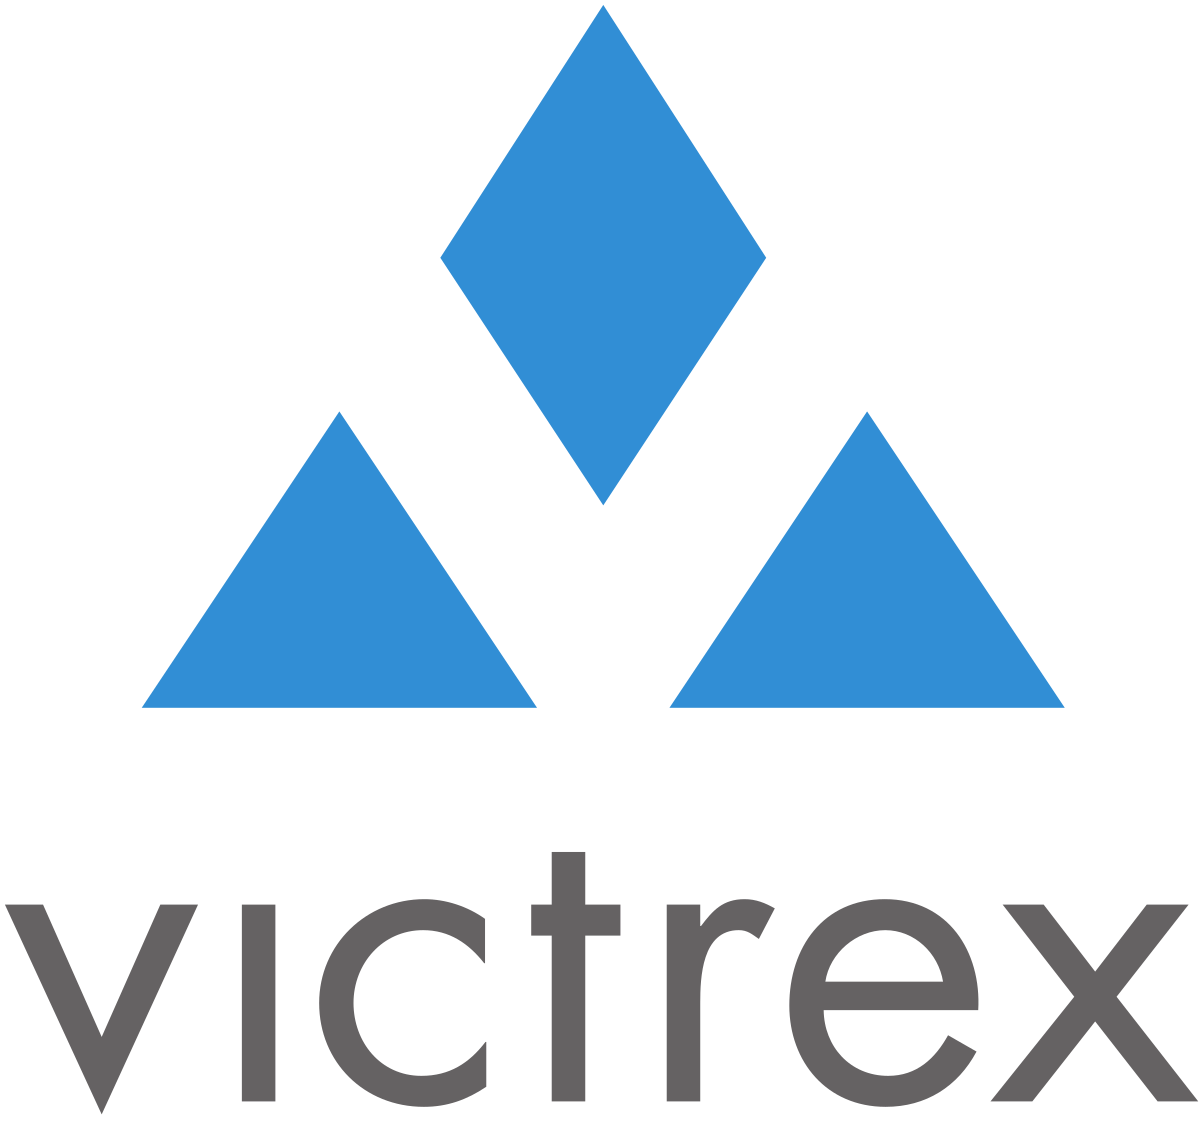 Victrex logo